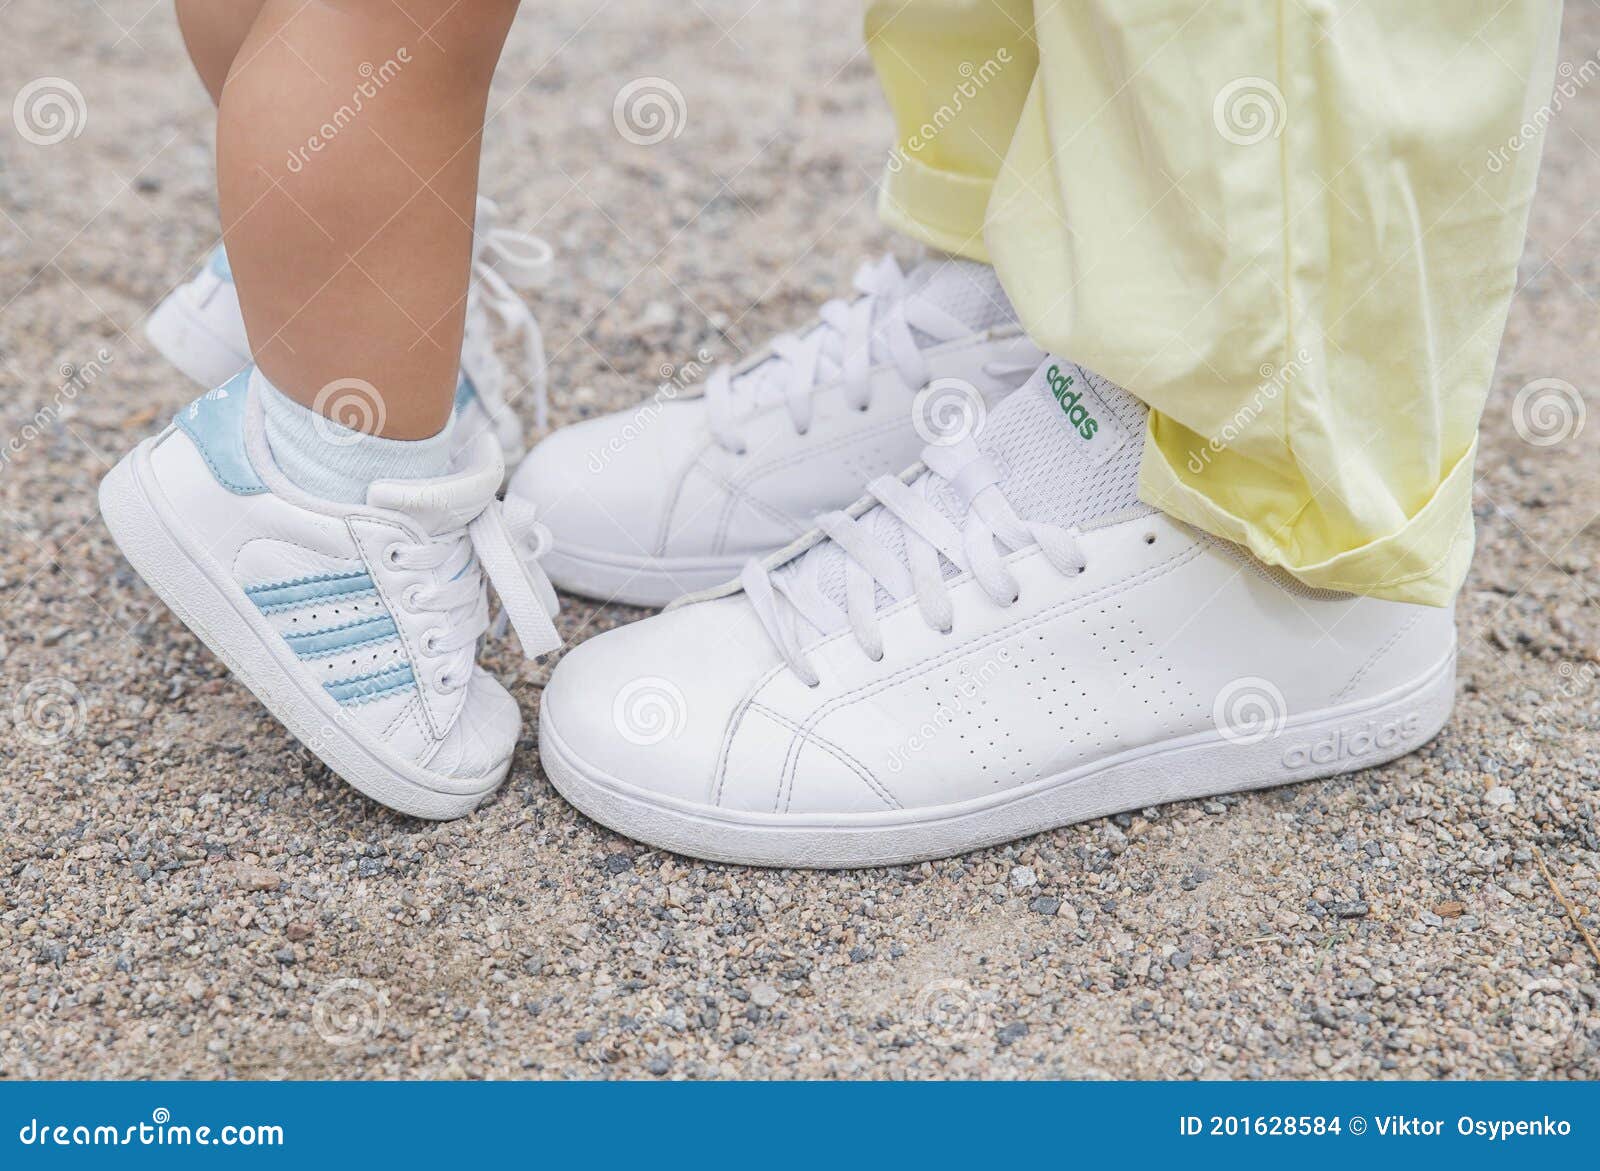 adidas | Shoes | Adidas Superstar White And Black Stripes | Poshmark